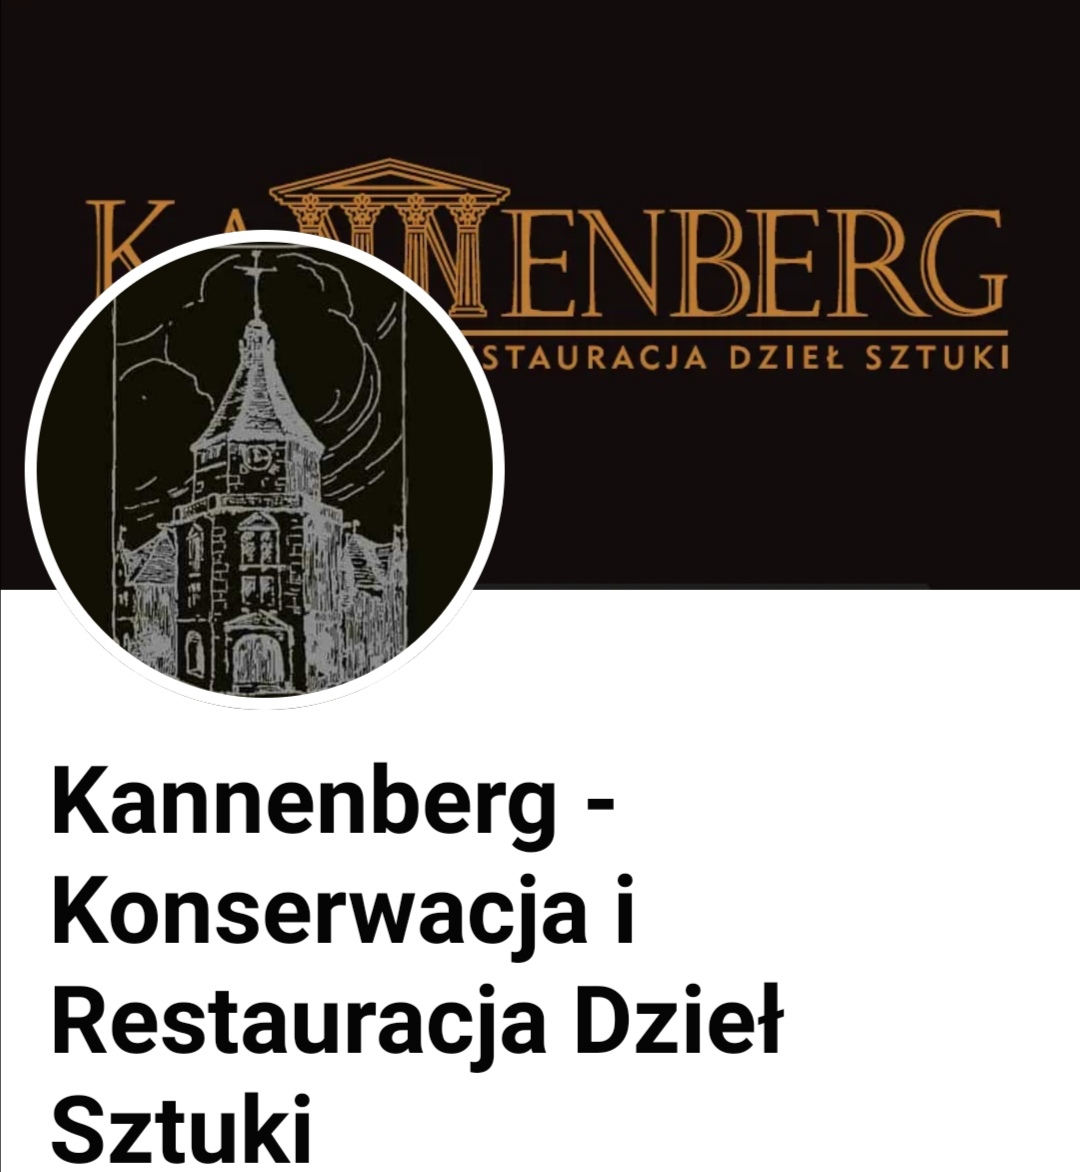 Kannenberg